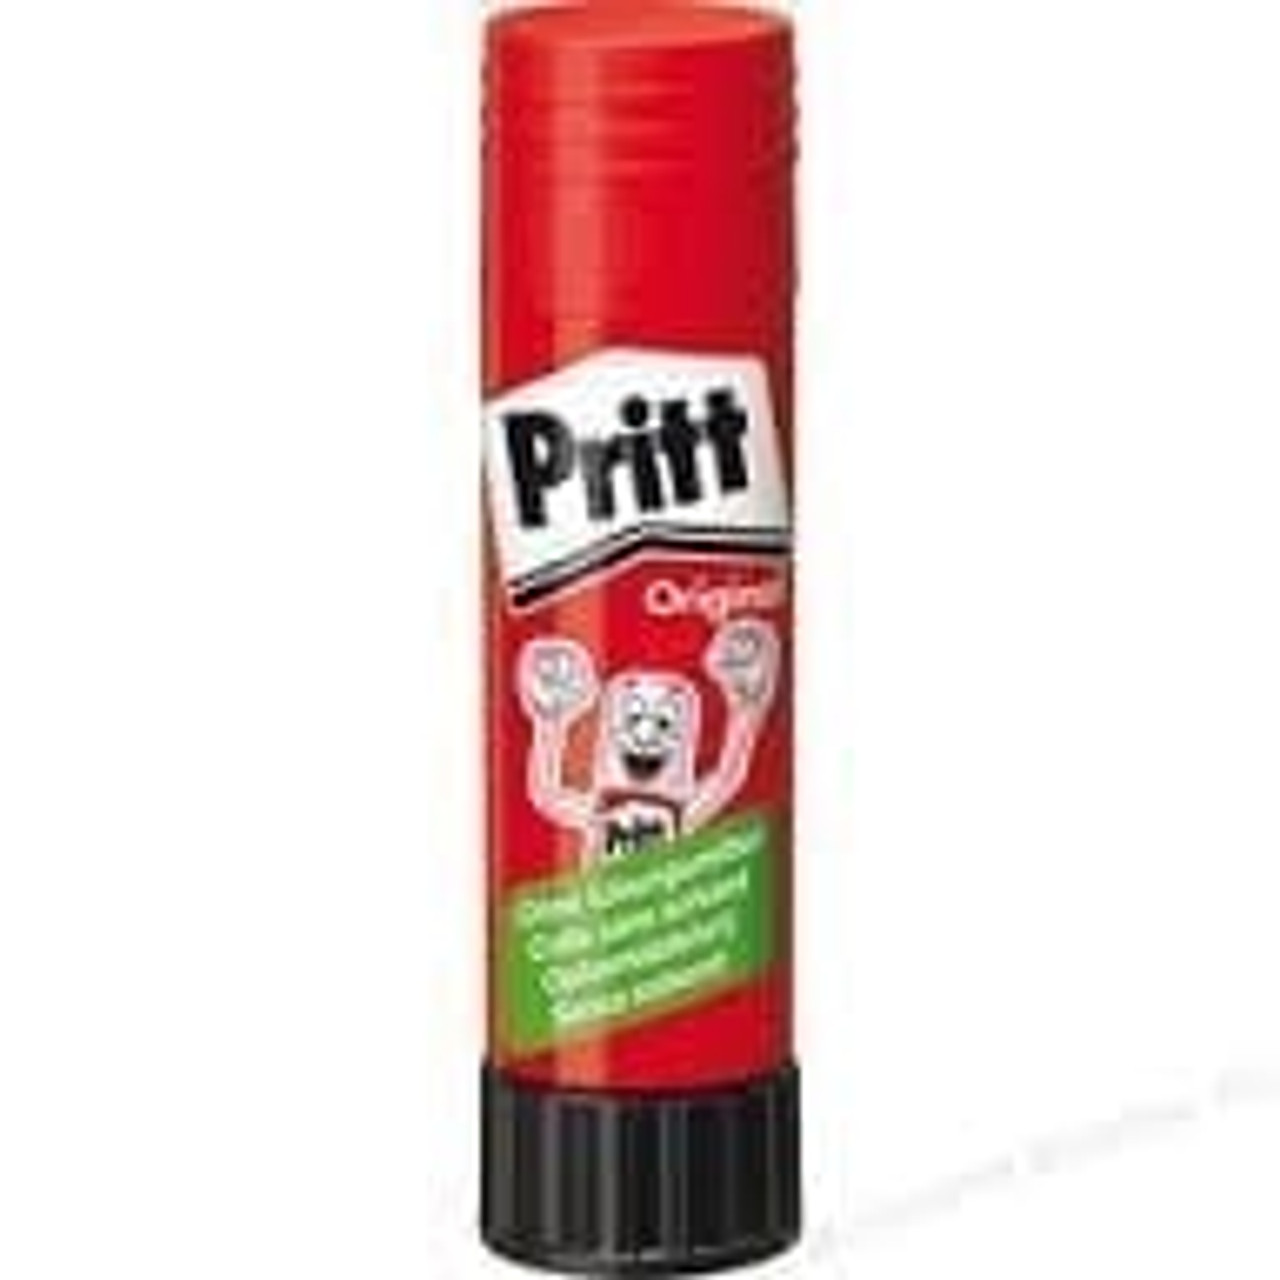 Pritt Universal 100g Glue Stick Red